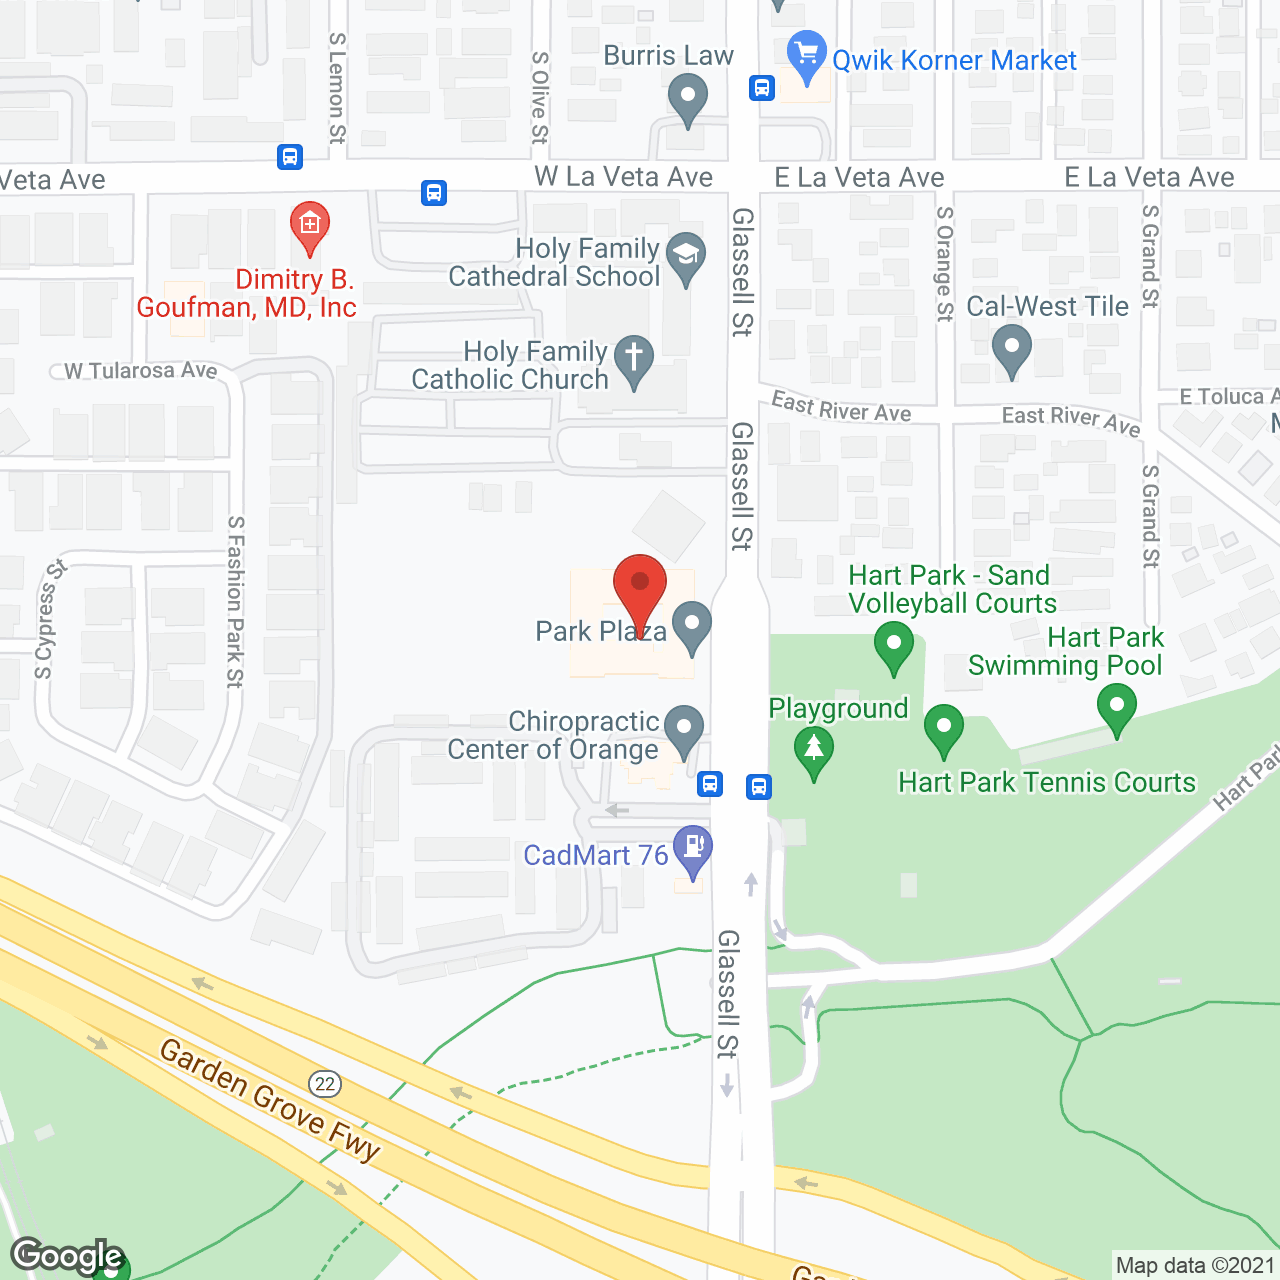 Park Plaza in google map